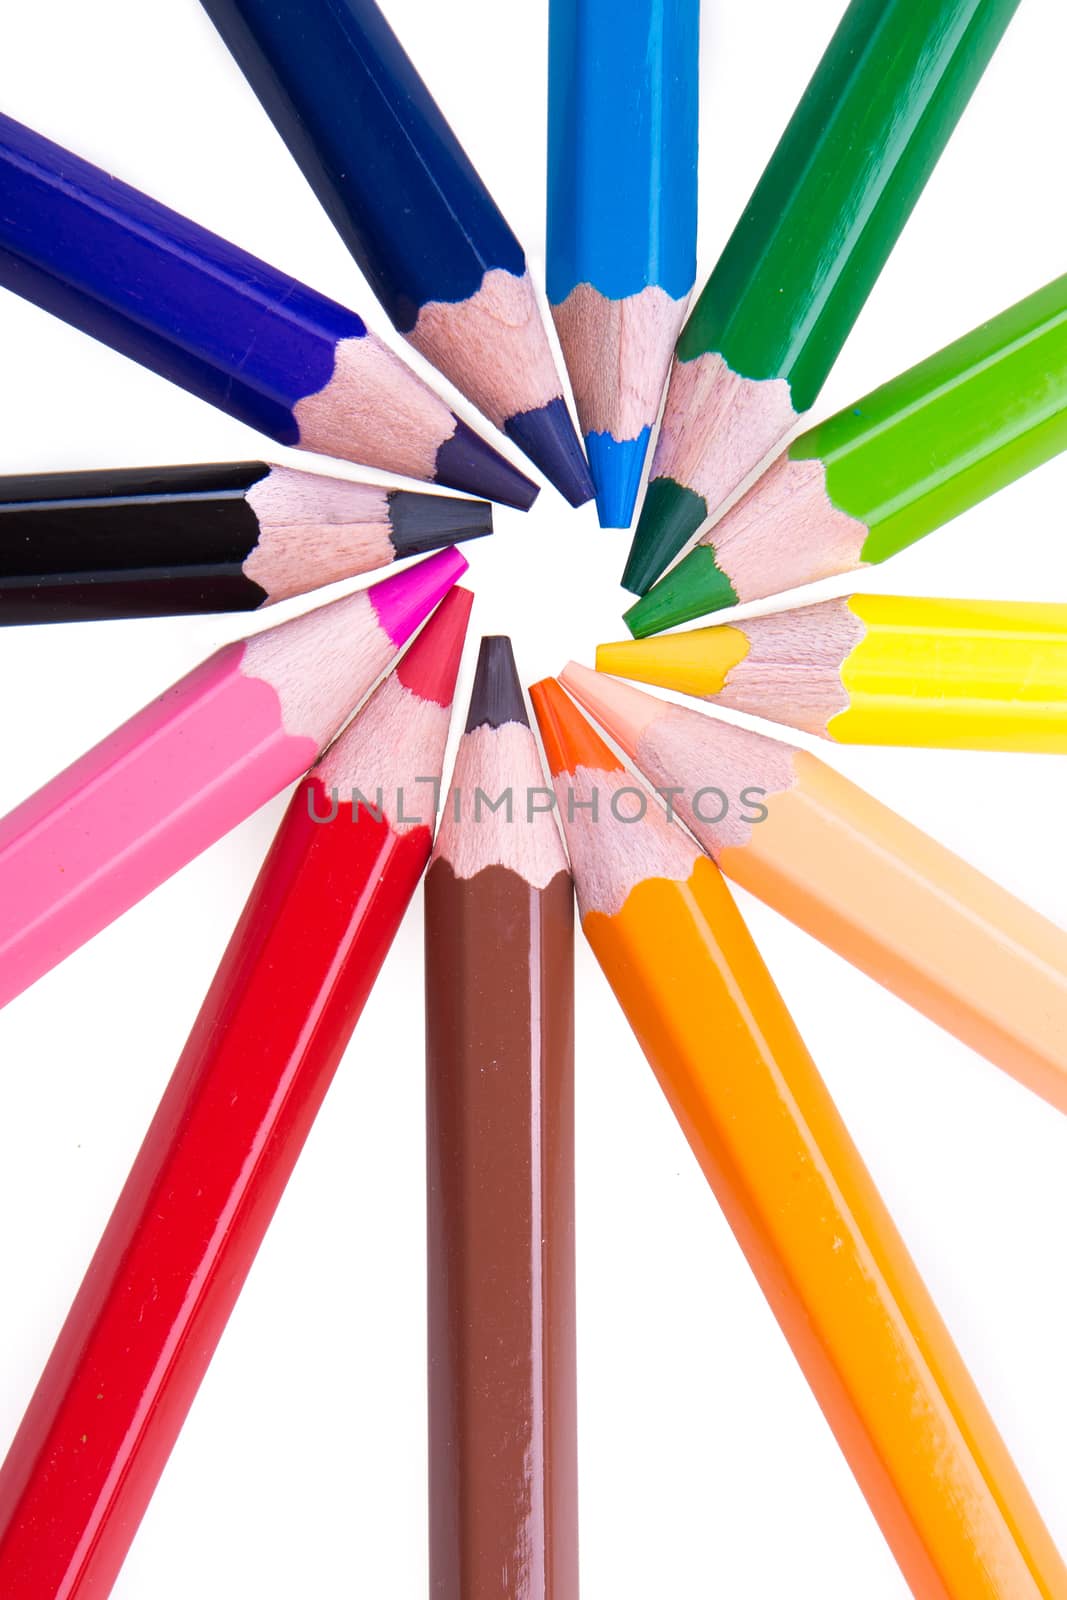 Colour pencils by tehcheesiong